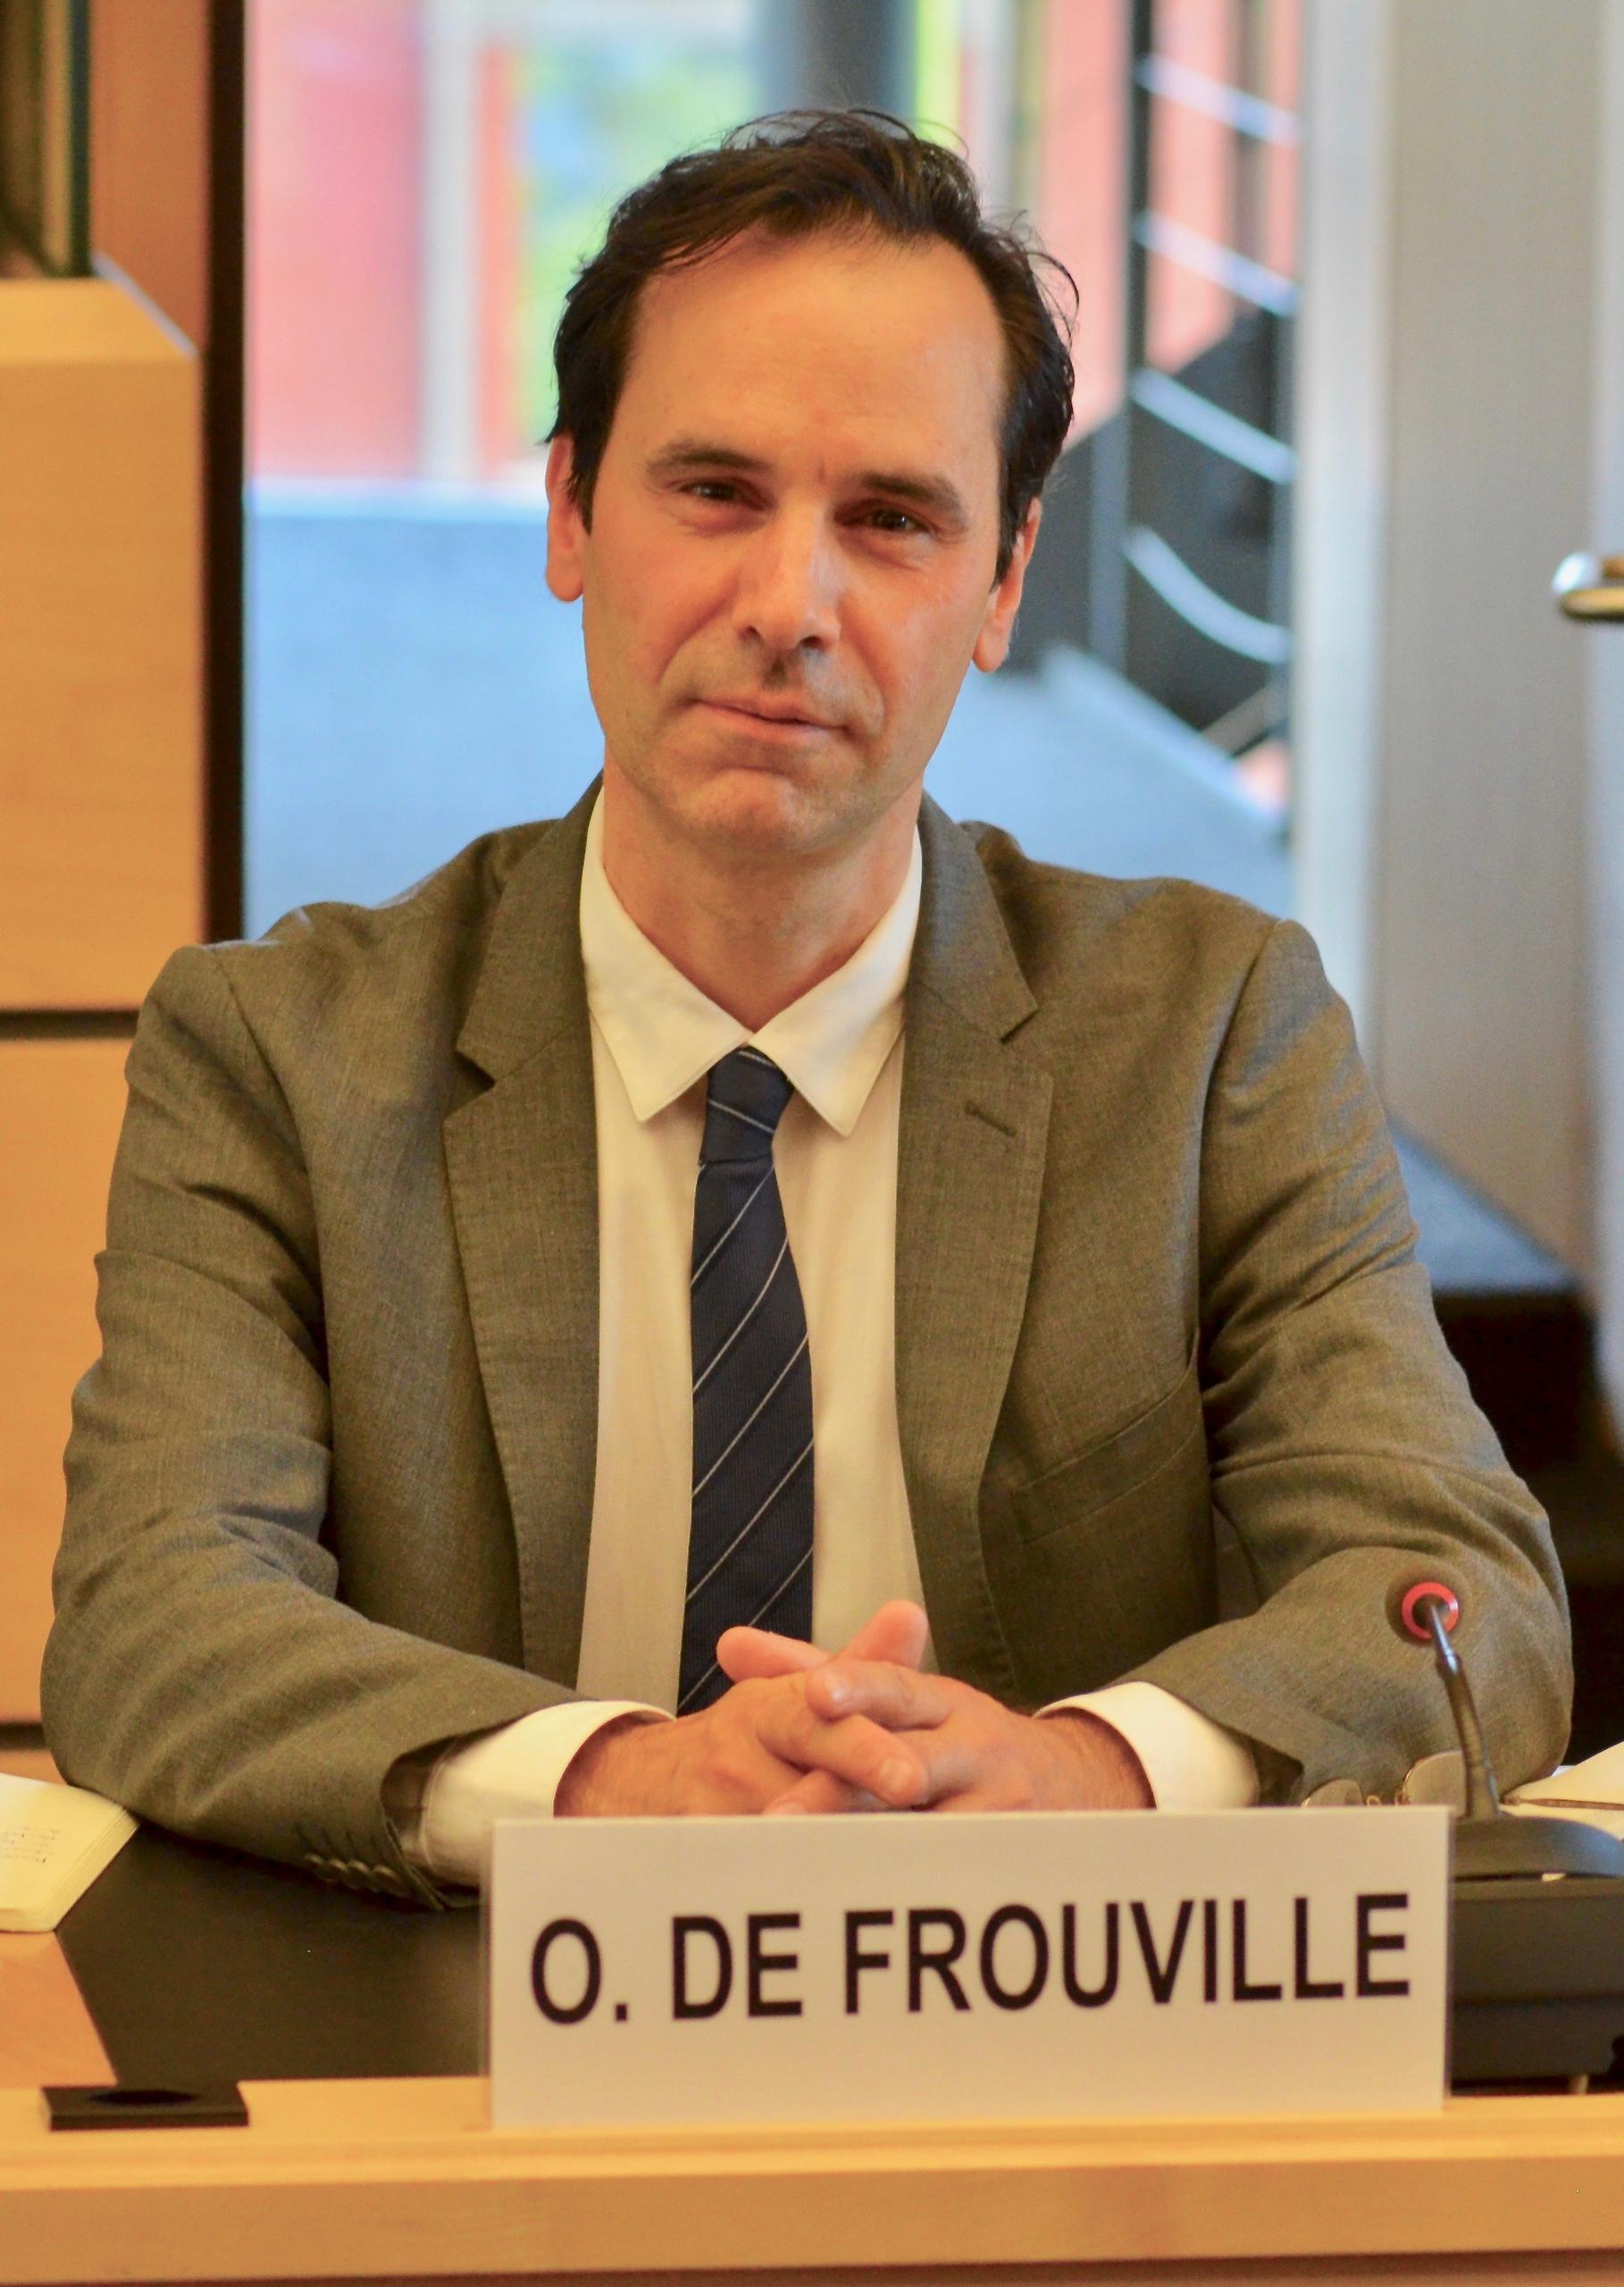 Olivier de Frouville, vice-president of the UN CED